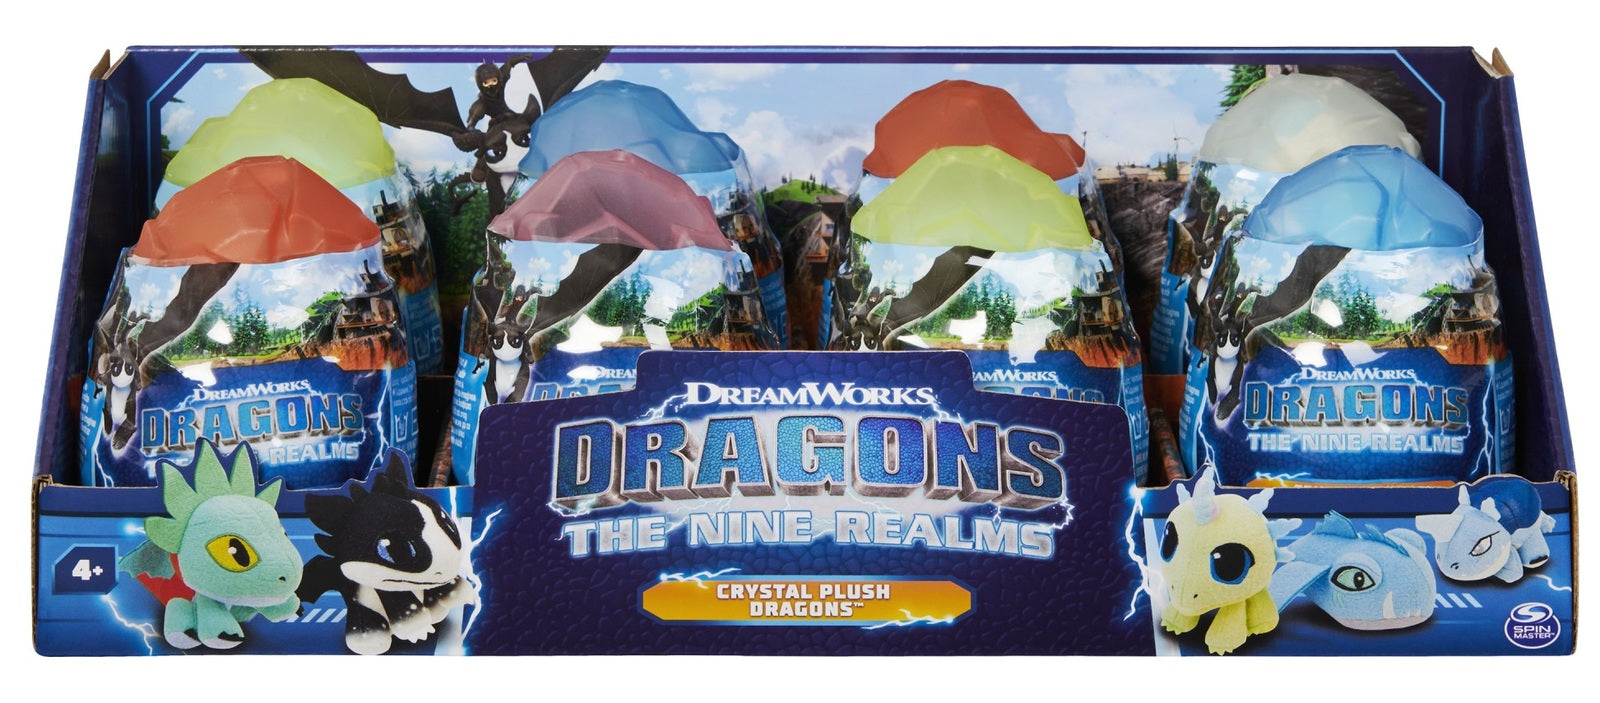 DreamWorks Dragons - Mystery Crystal Plush (Blind Box)